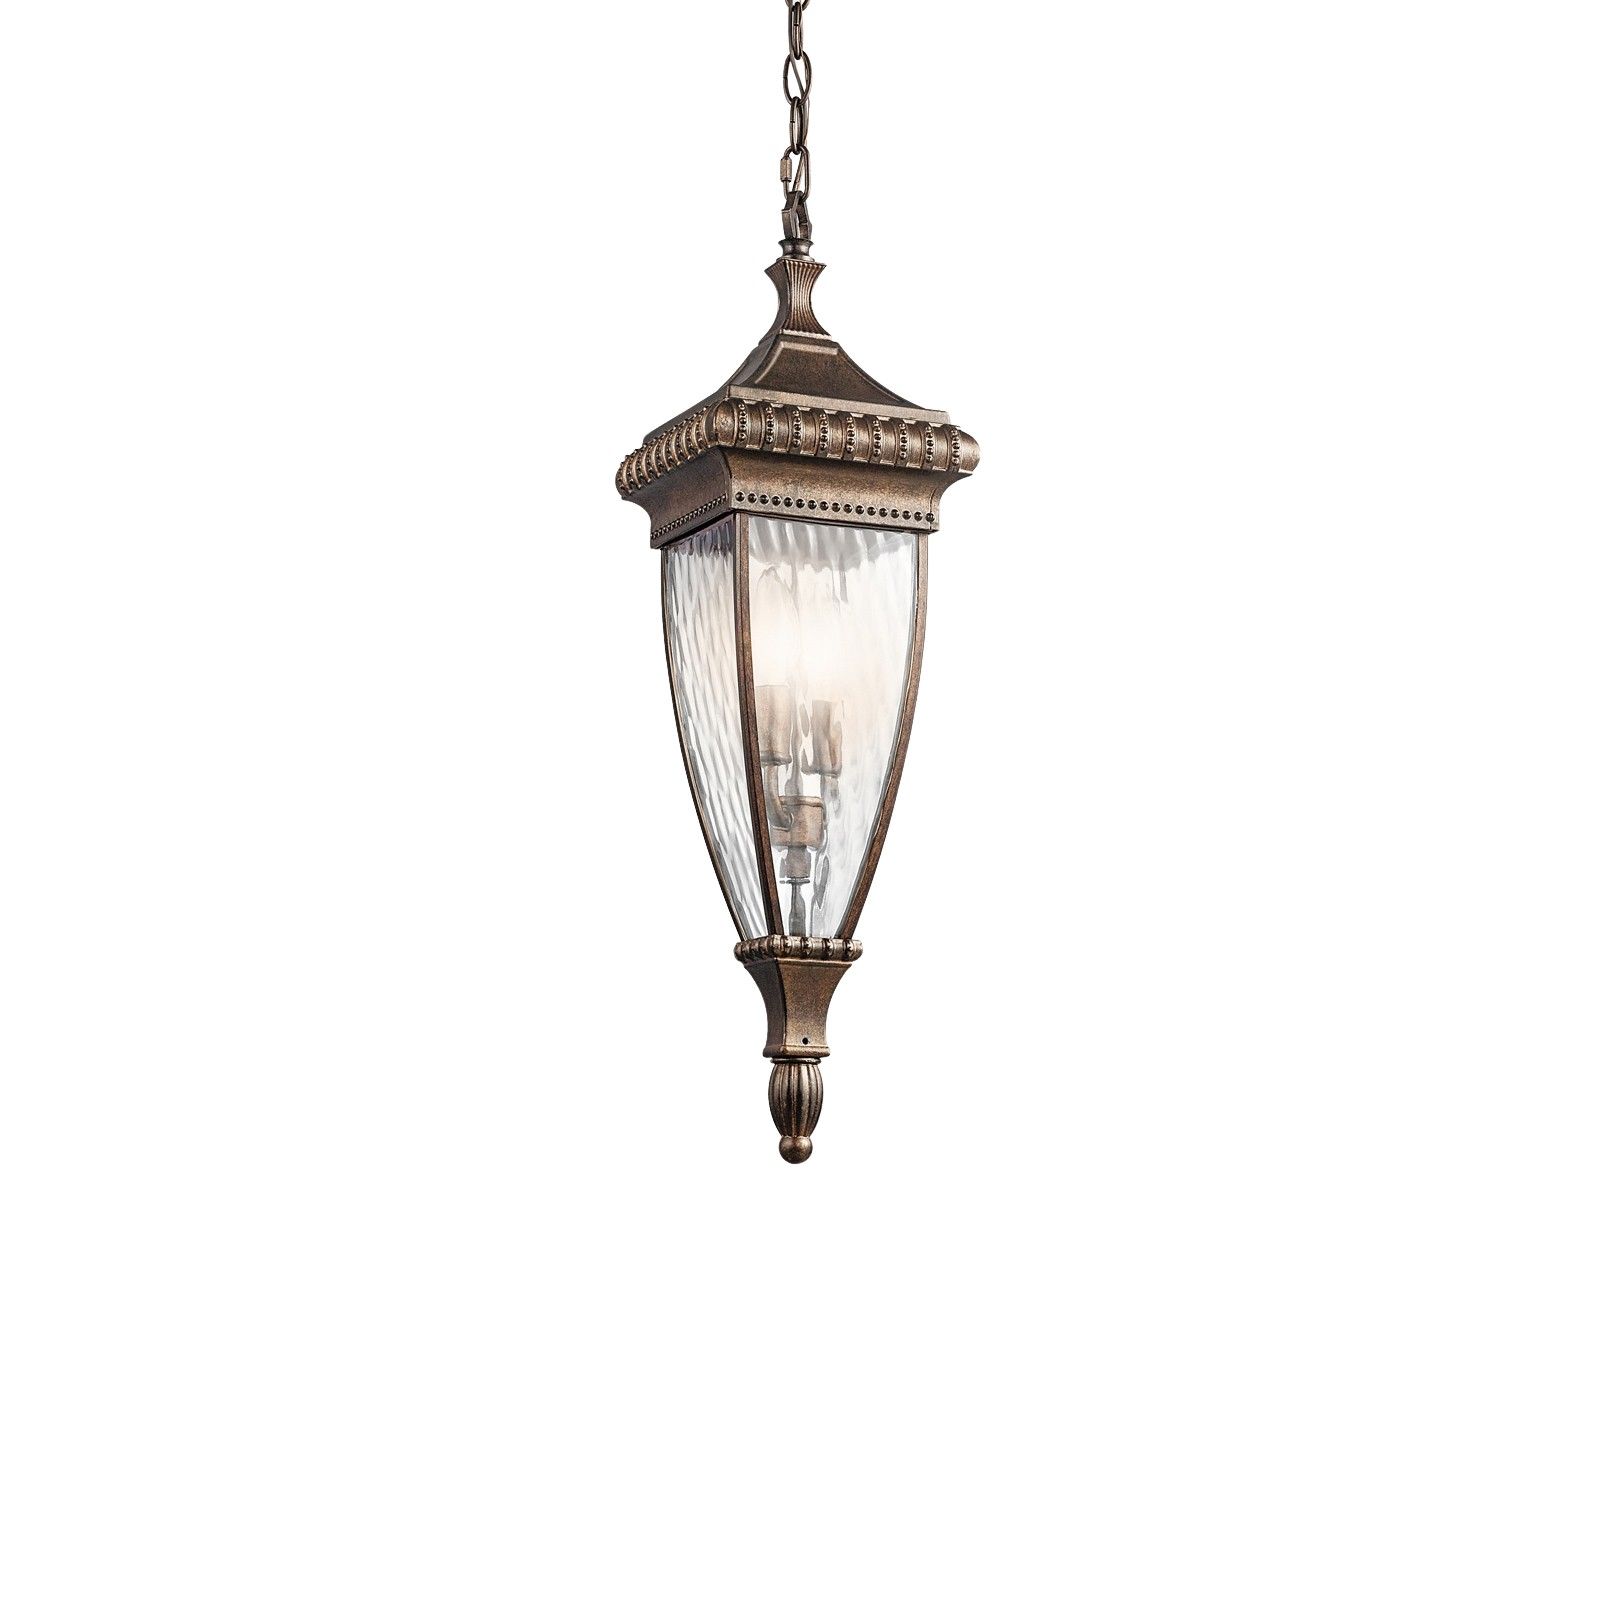 Venice chain lantern